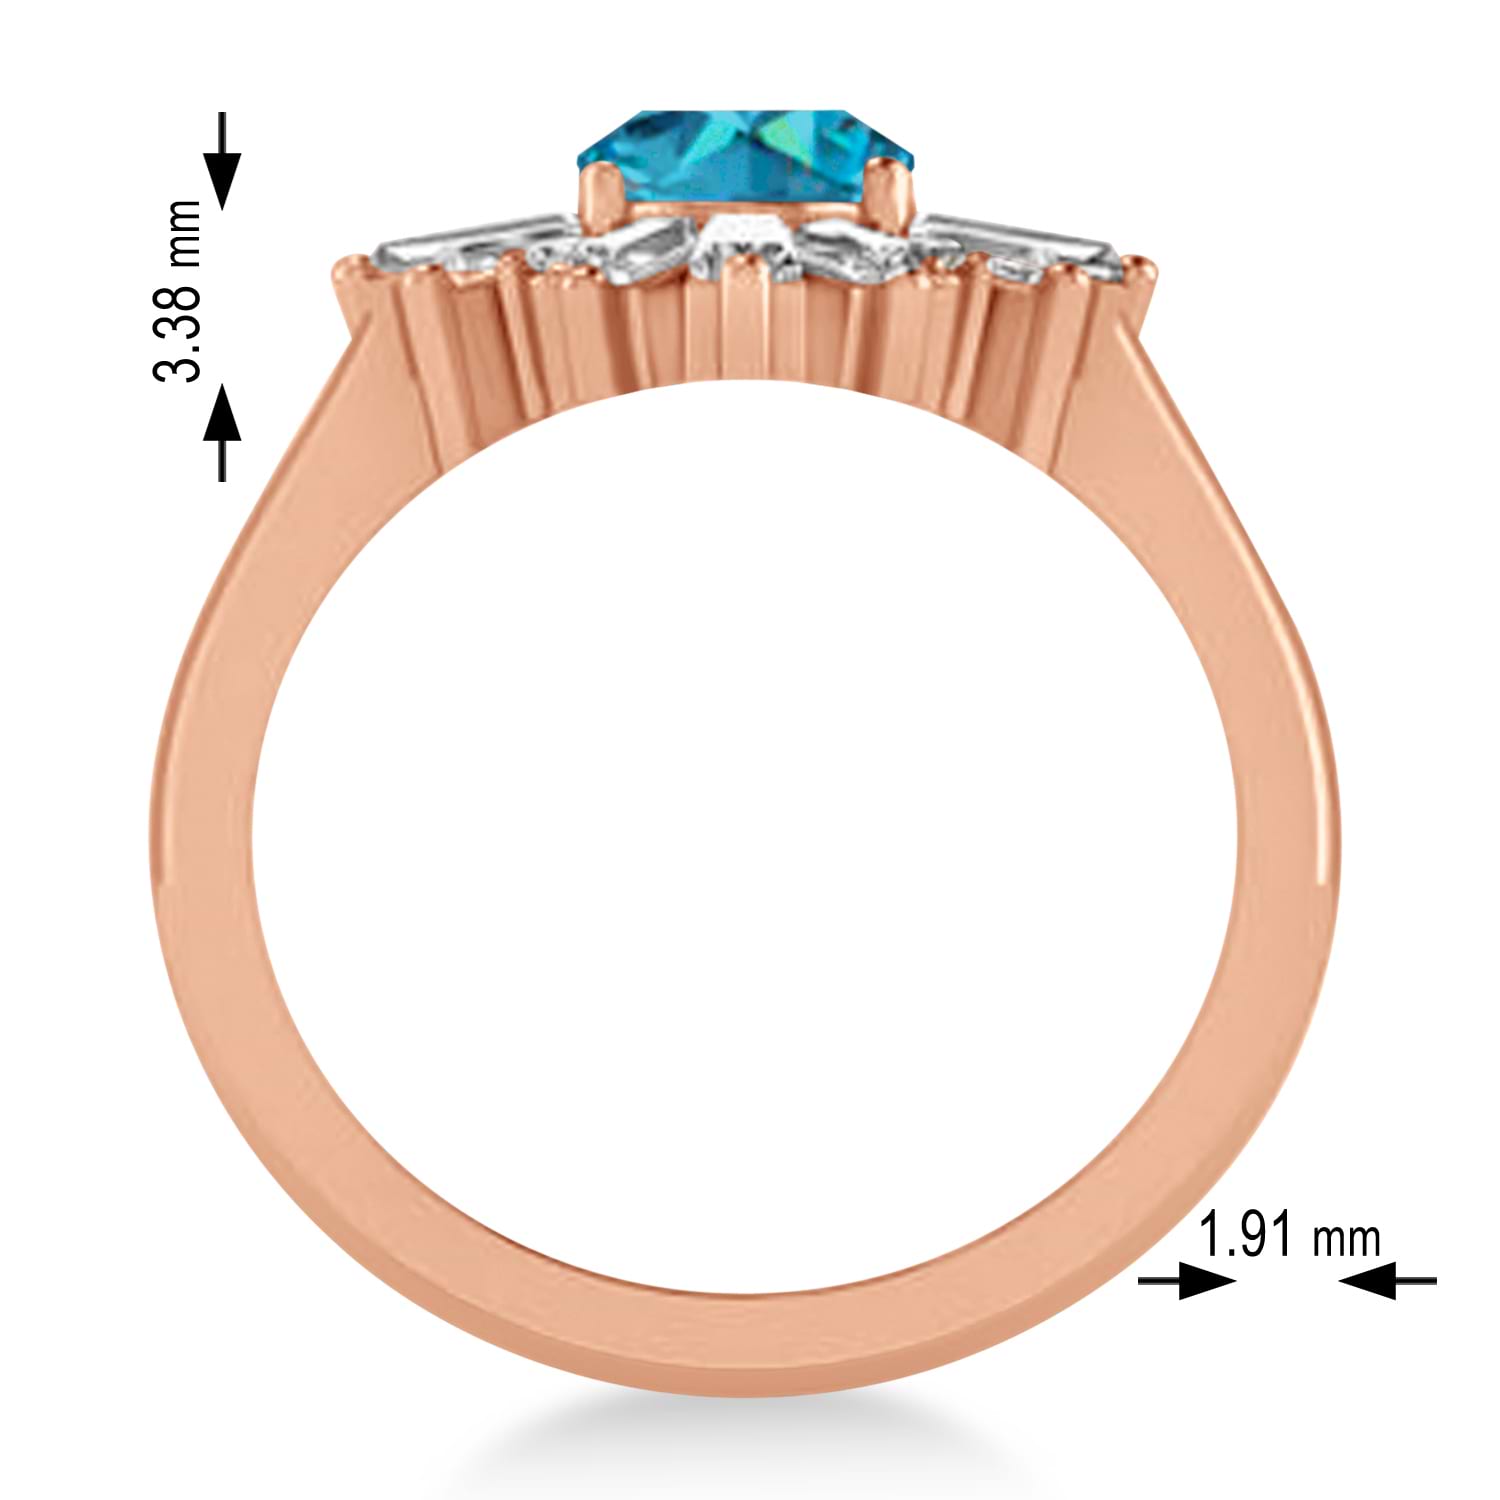 Blue Diamond Oval Cut Ballerina Engagement Ring 18k Rose Gold (2.51 ctw)